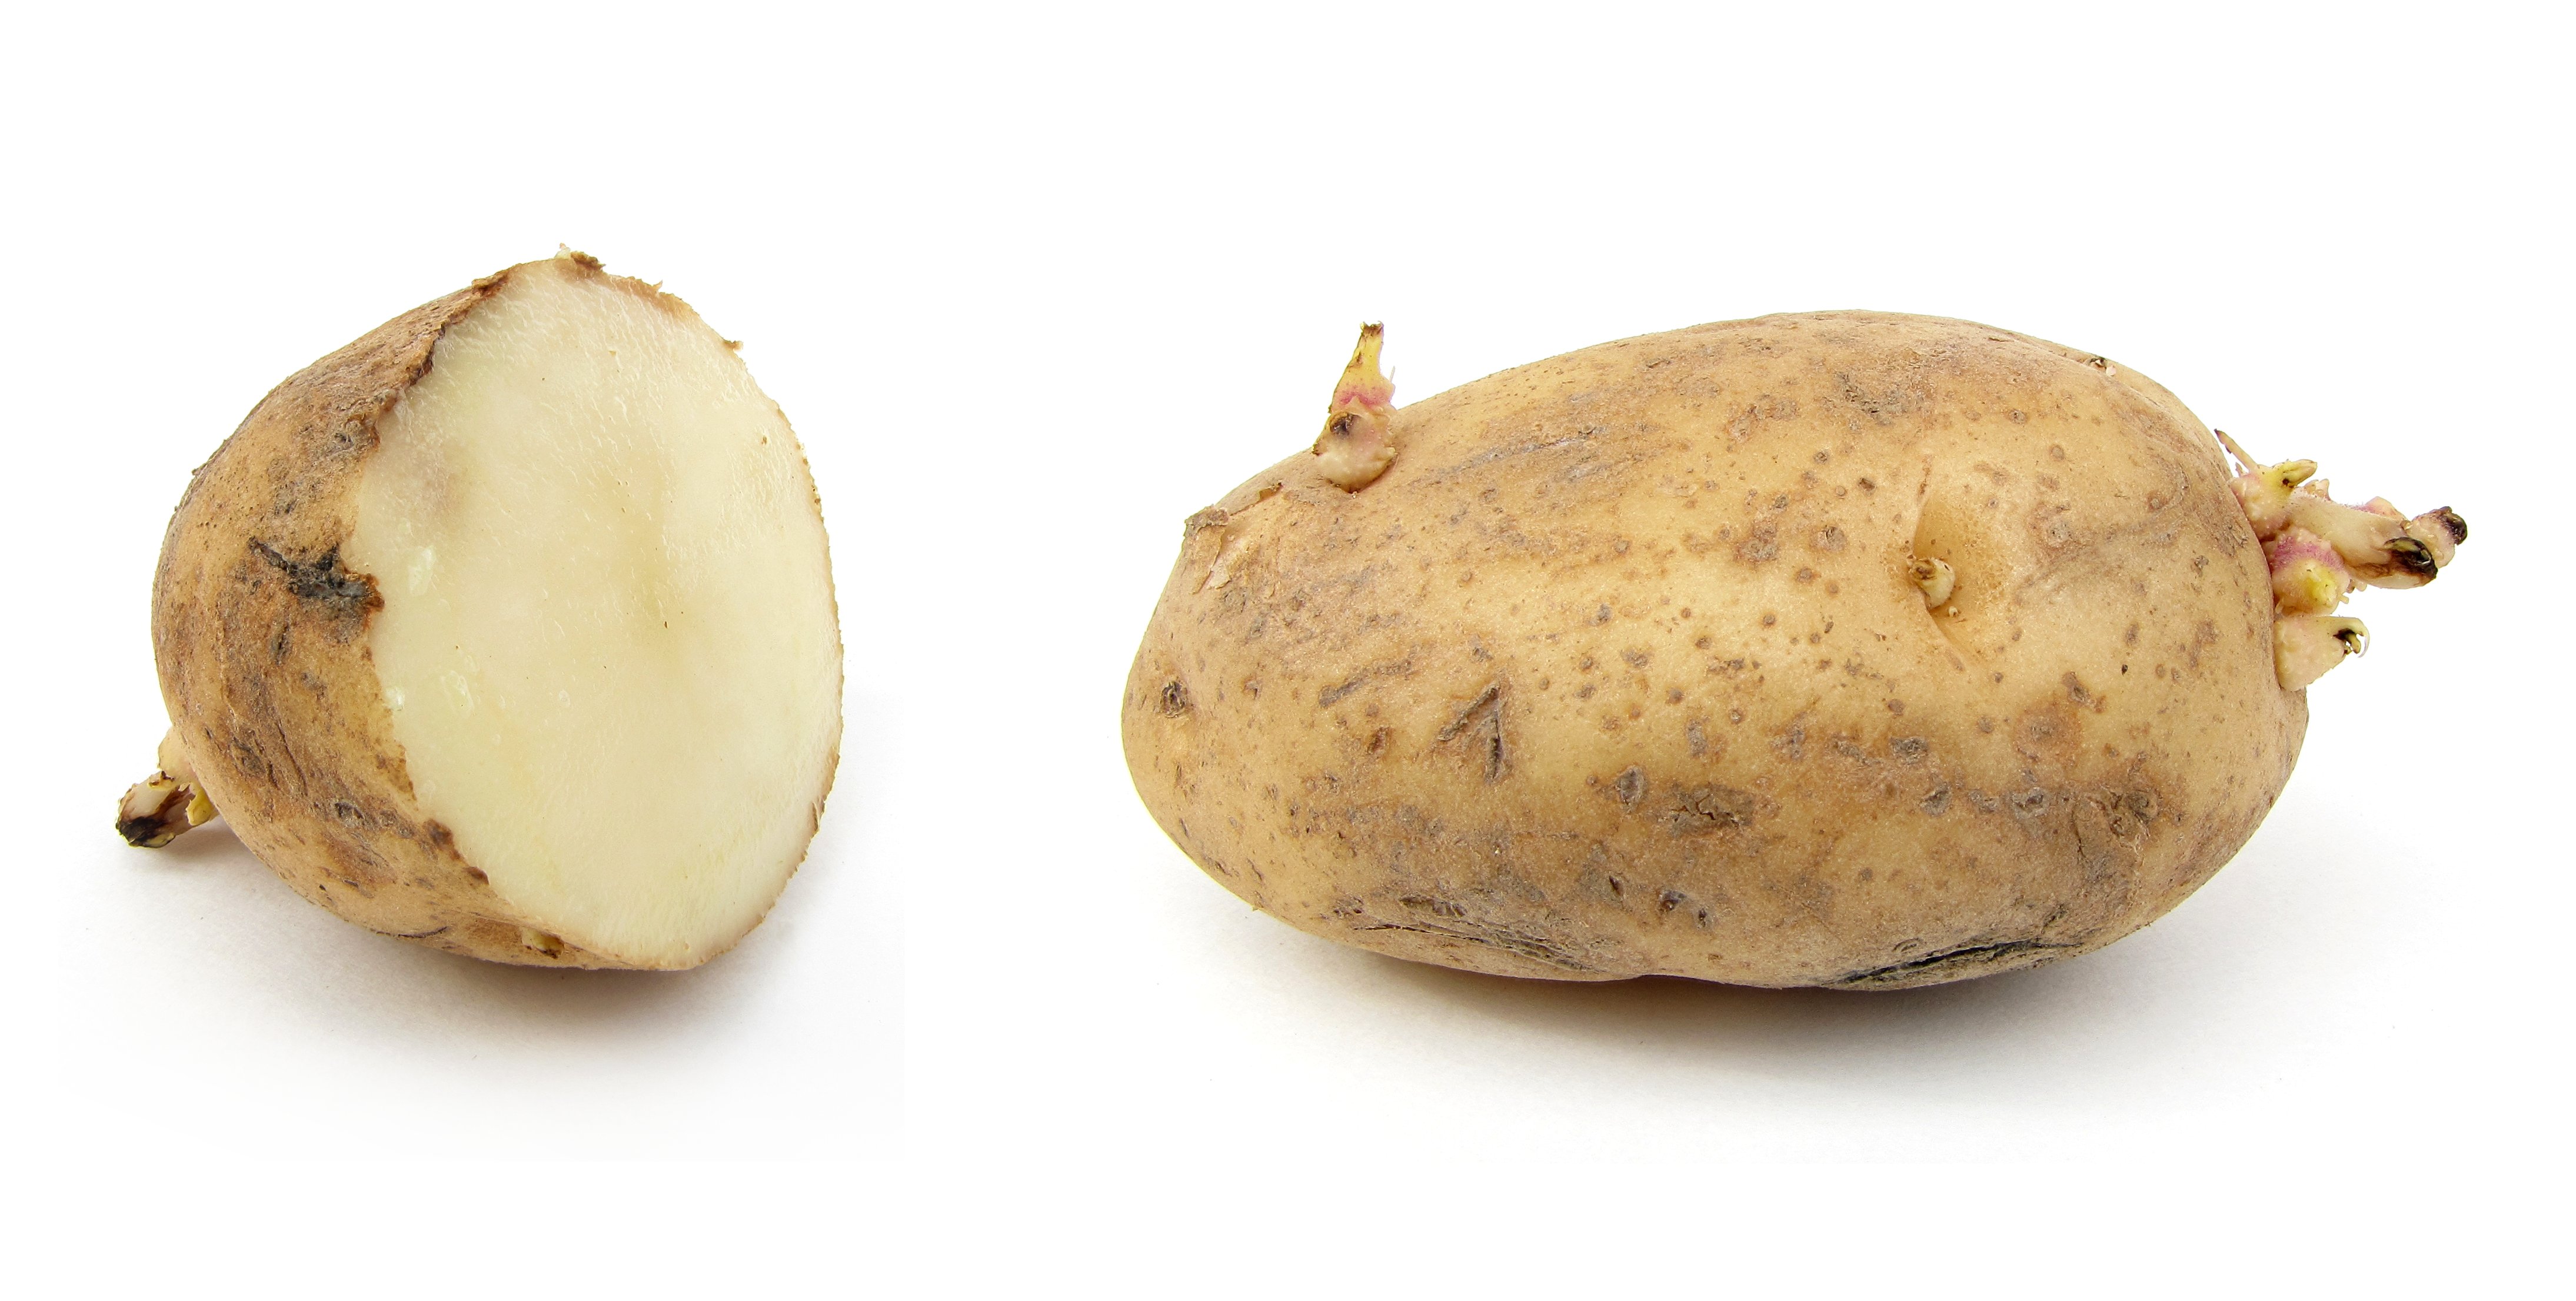 Potato - Wikipedia